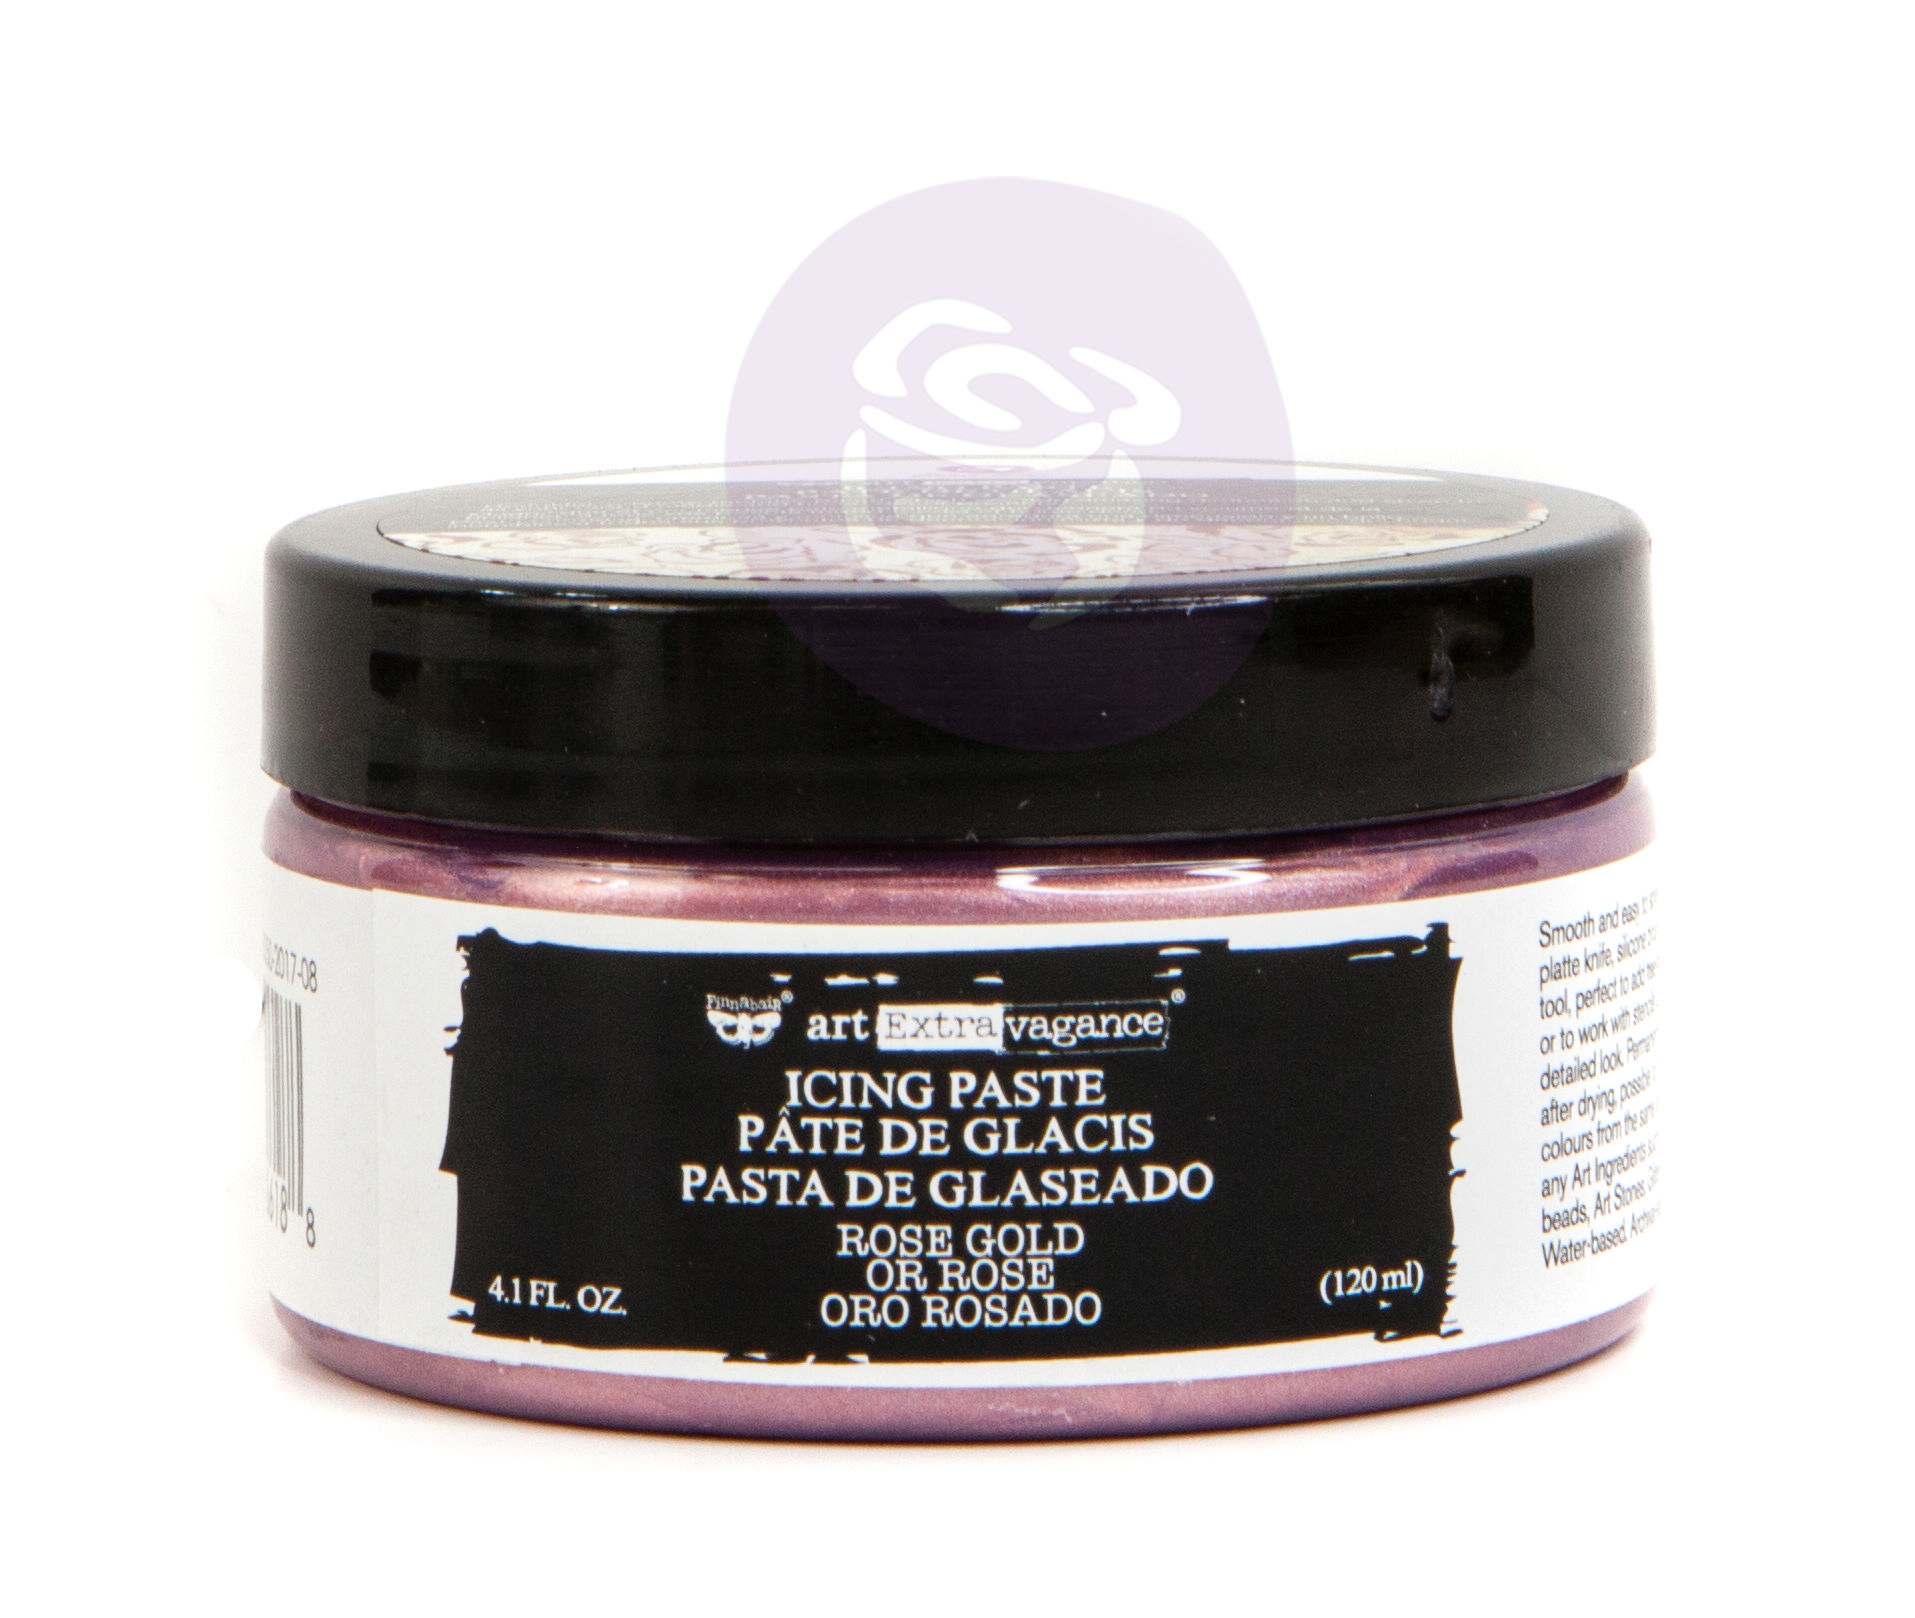  PM966188 Pasta - Finnabair Art Extravagance Icing Paste - Prima-rose gold